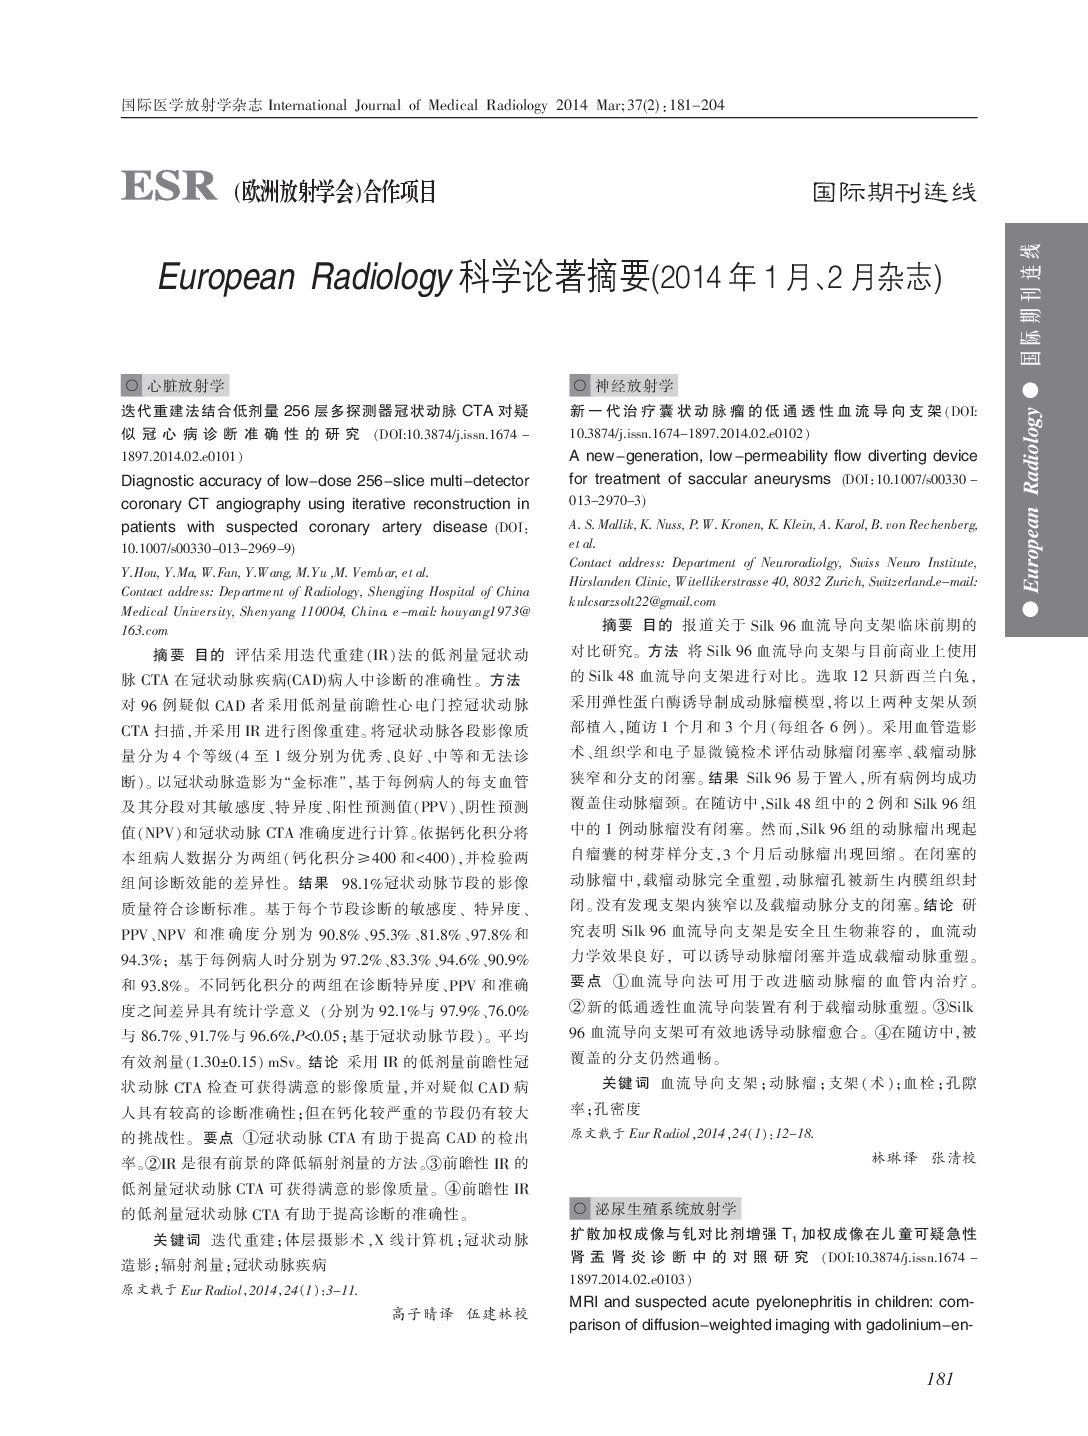 European Radiology Vol. 2014, January-February (1,8MB)